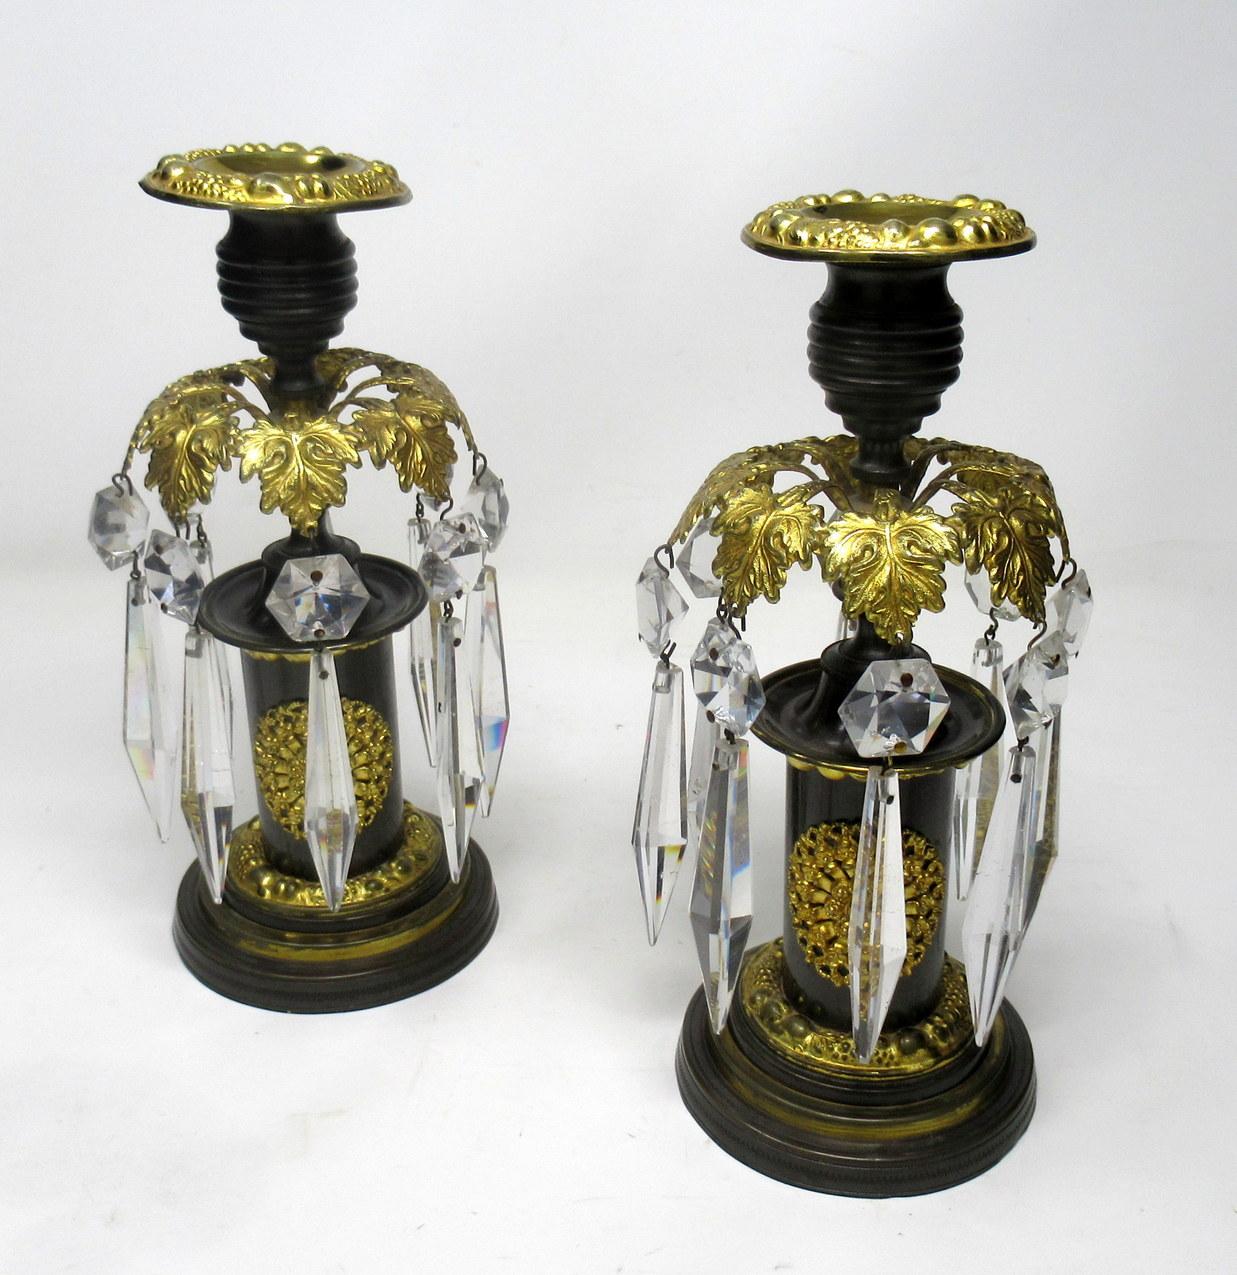 Cast Pair of English Regency Ormolu Bronze Lusters Candlesticks, 19th Century